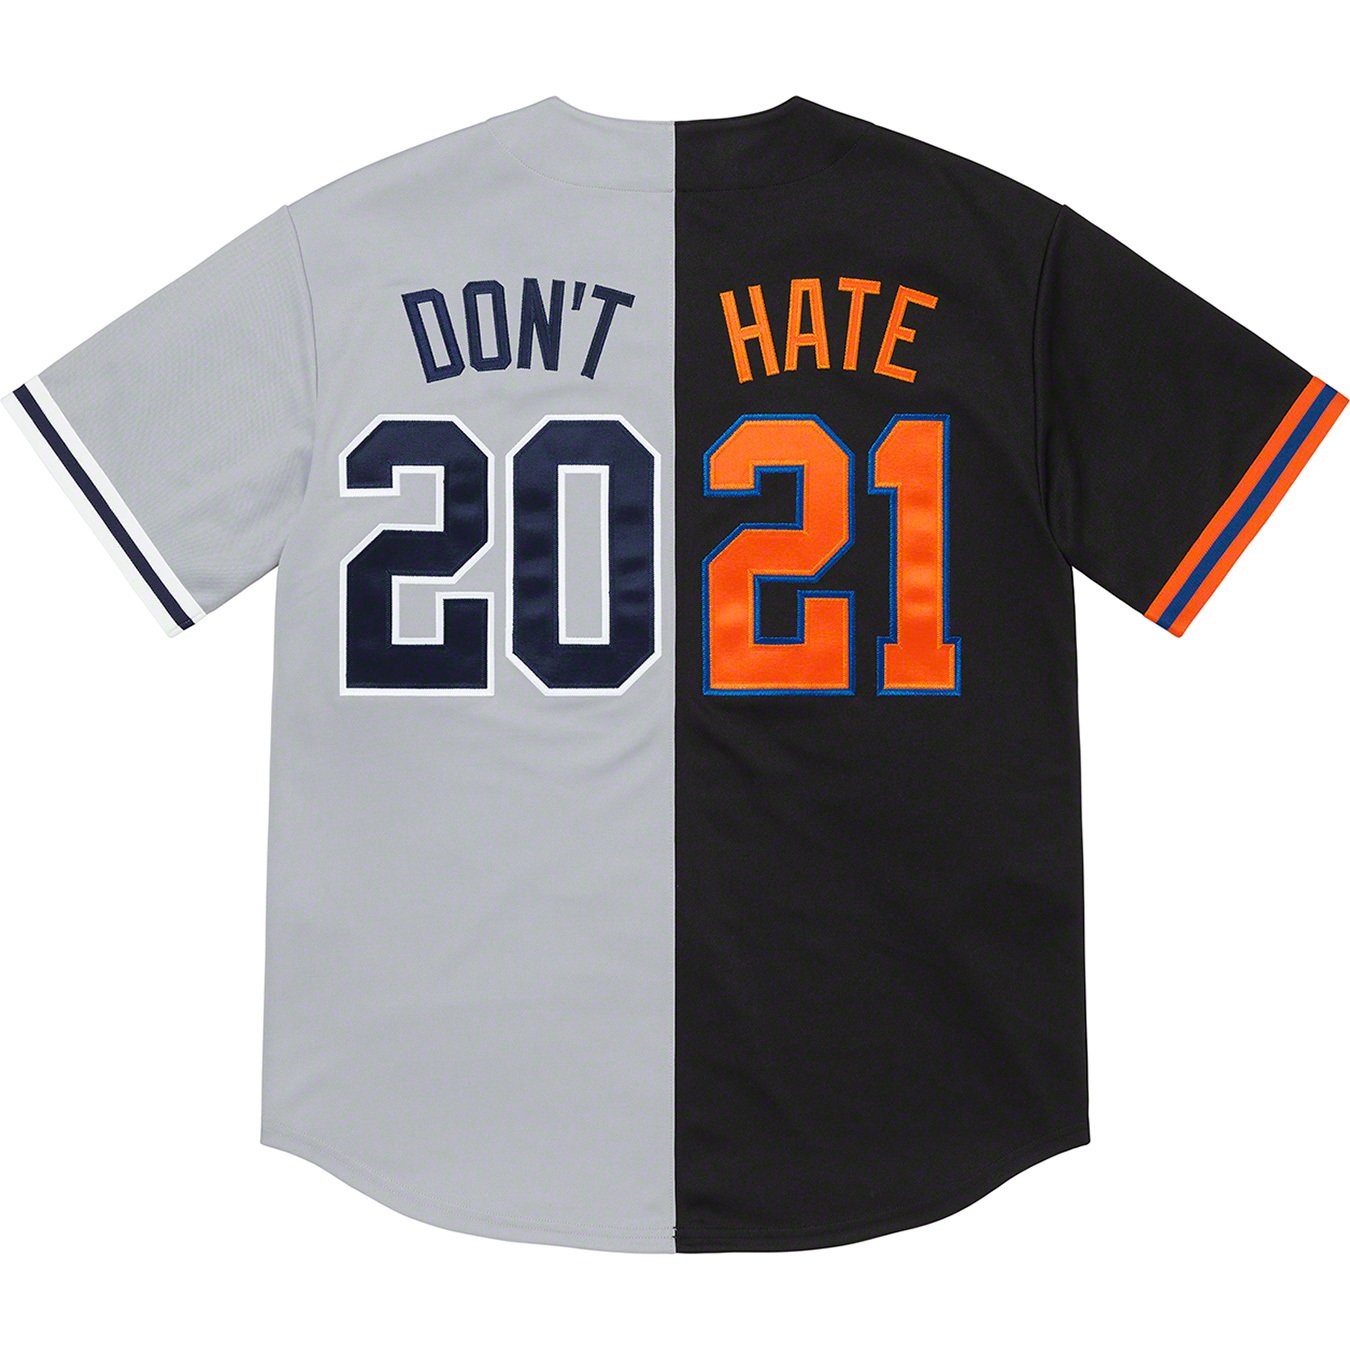 【XL】Don’t Hate Baseball Jersey